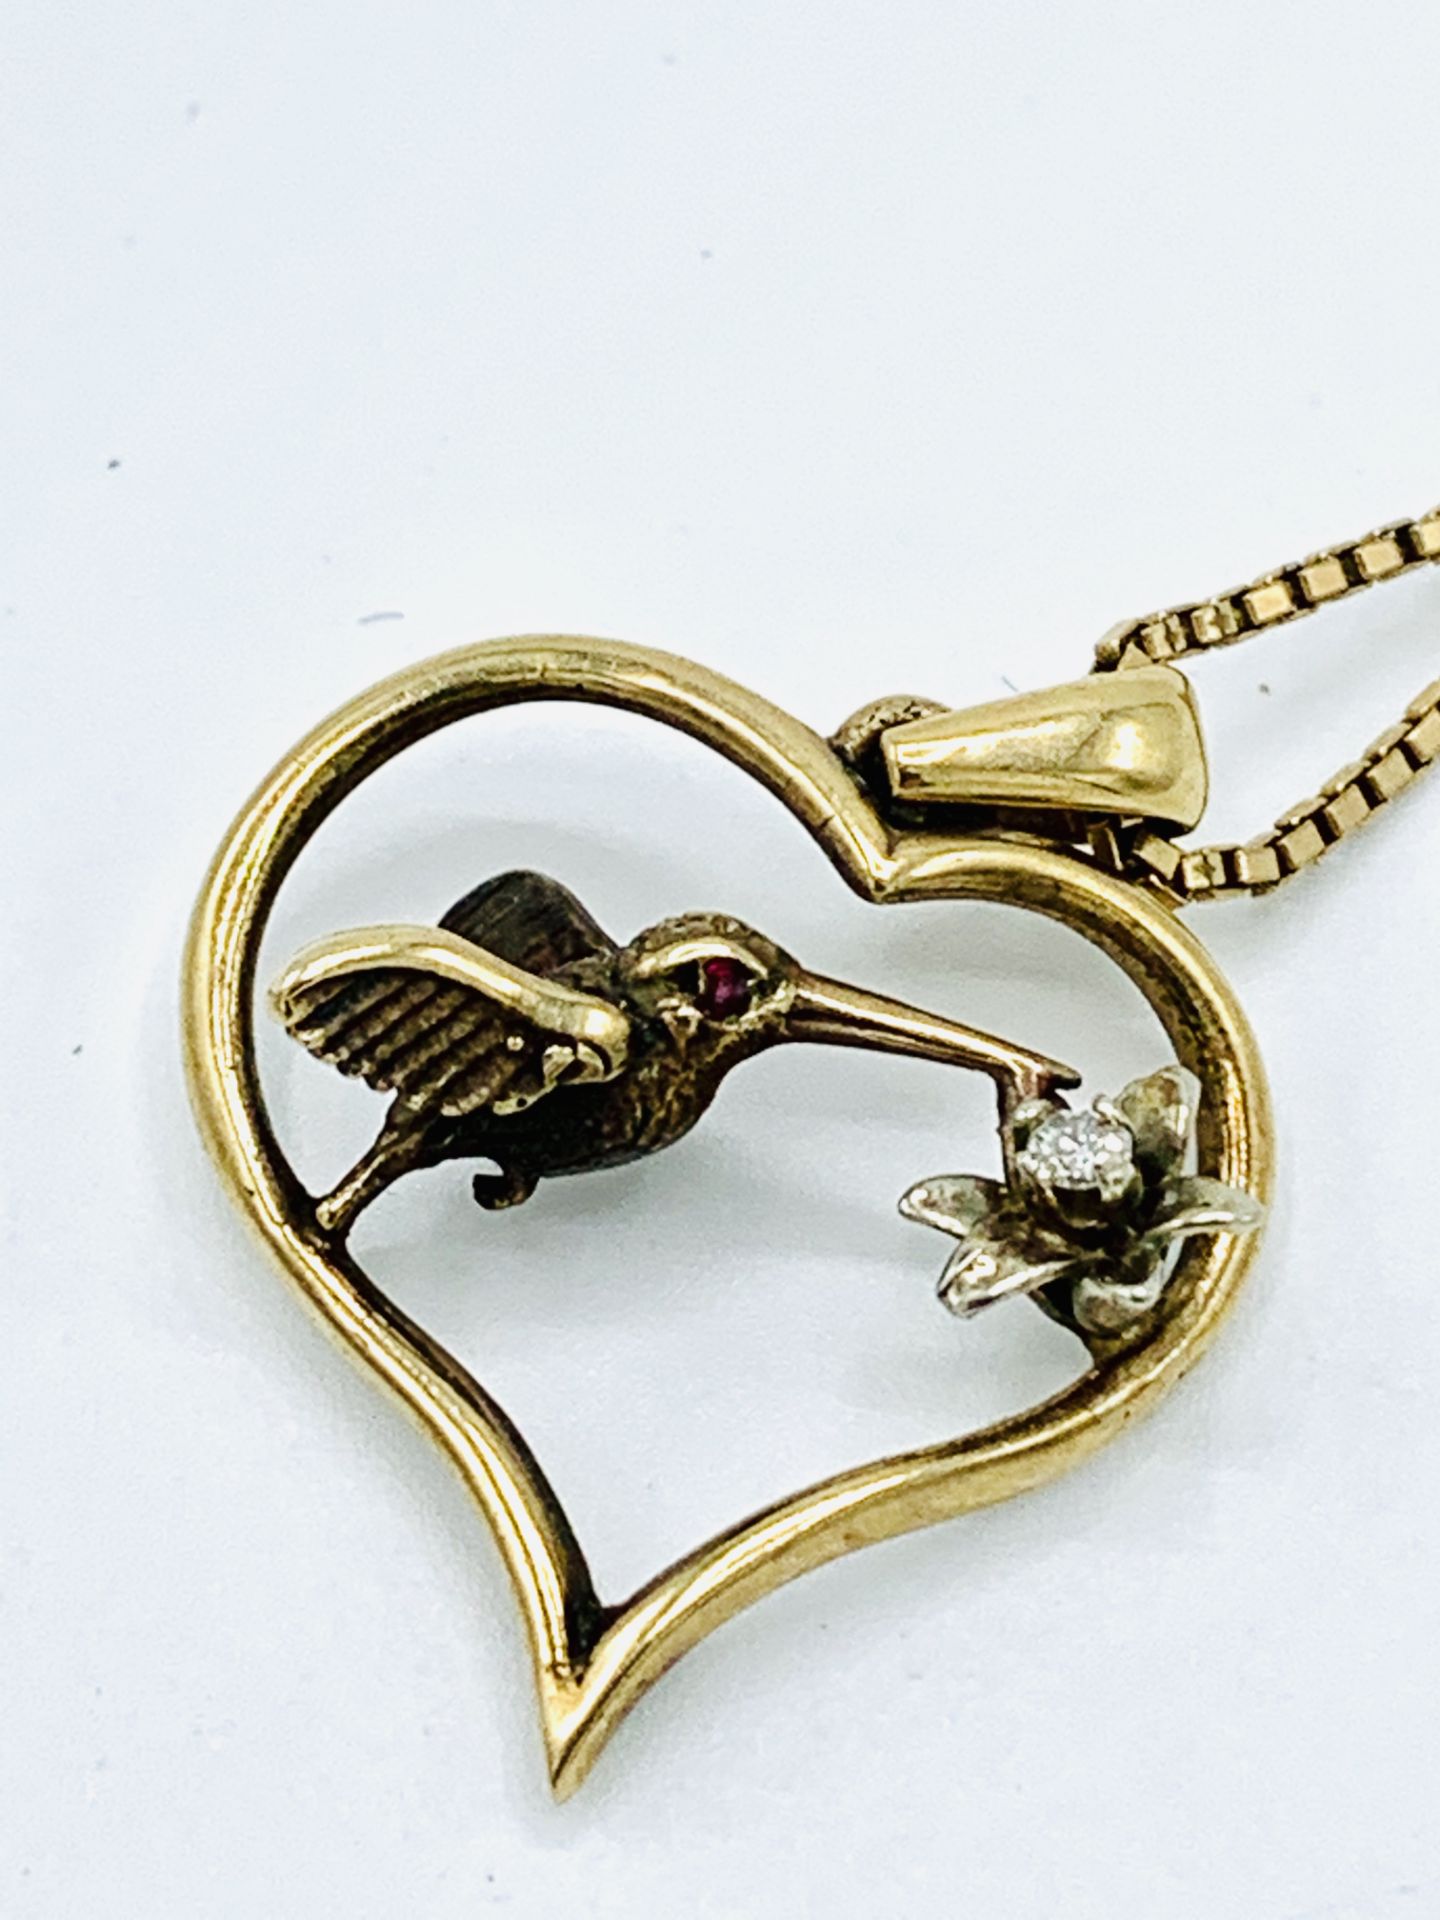 9k gold, diamond and ruby Hummingbird pendant and chain.